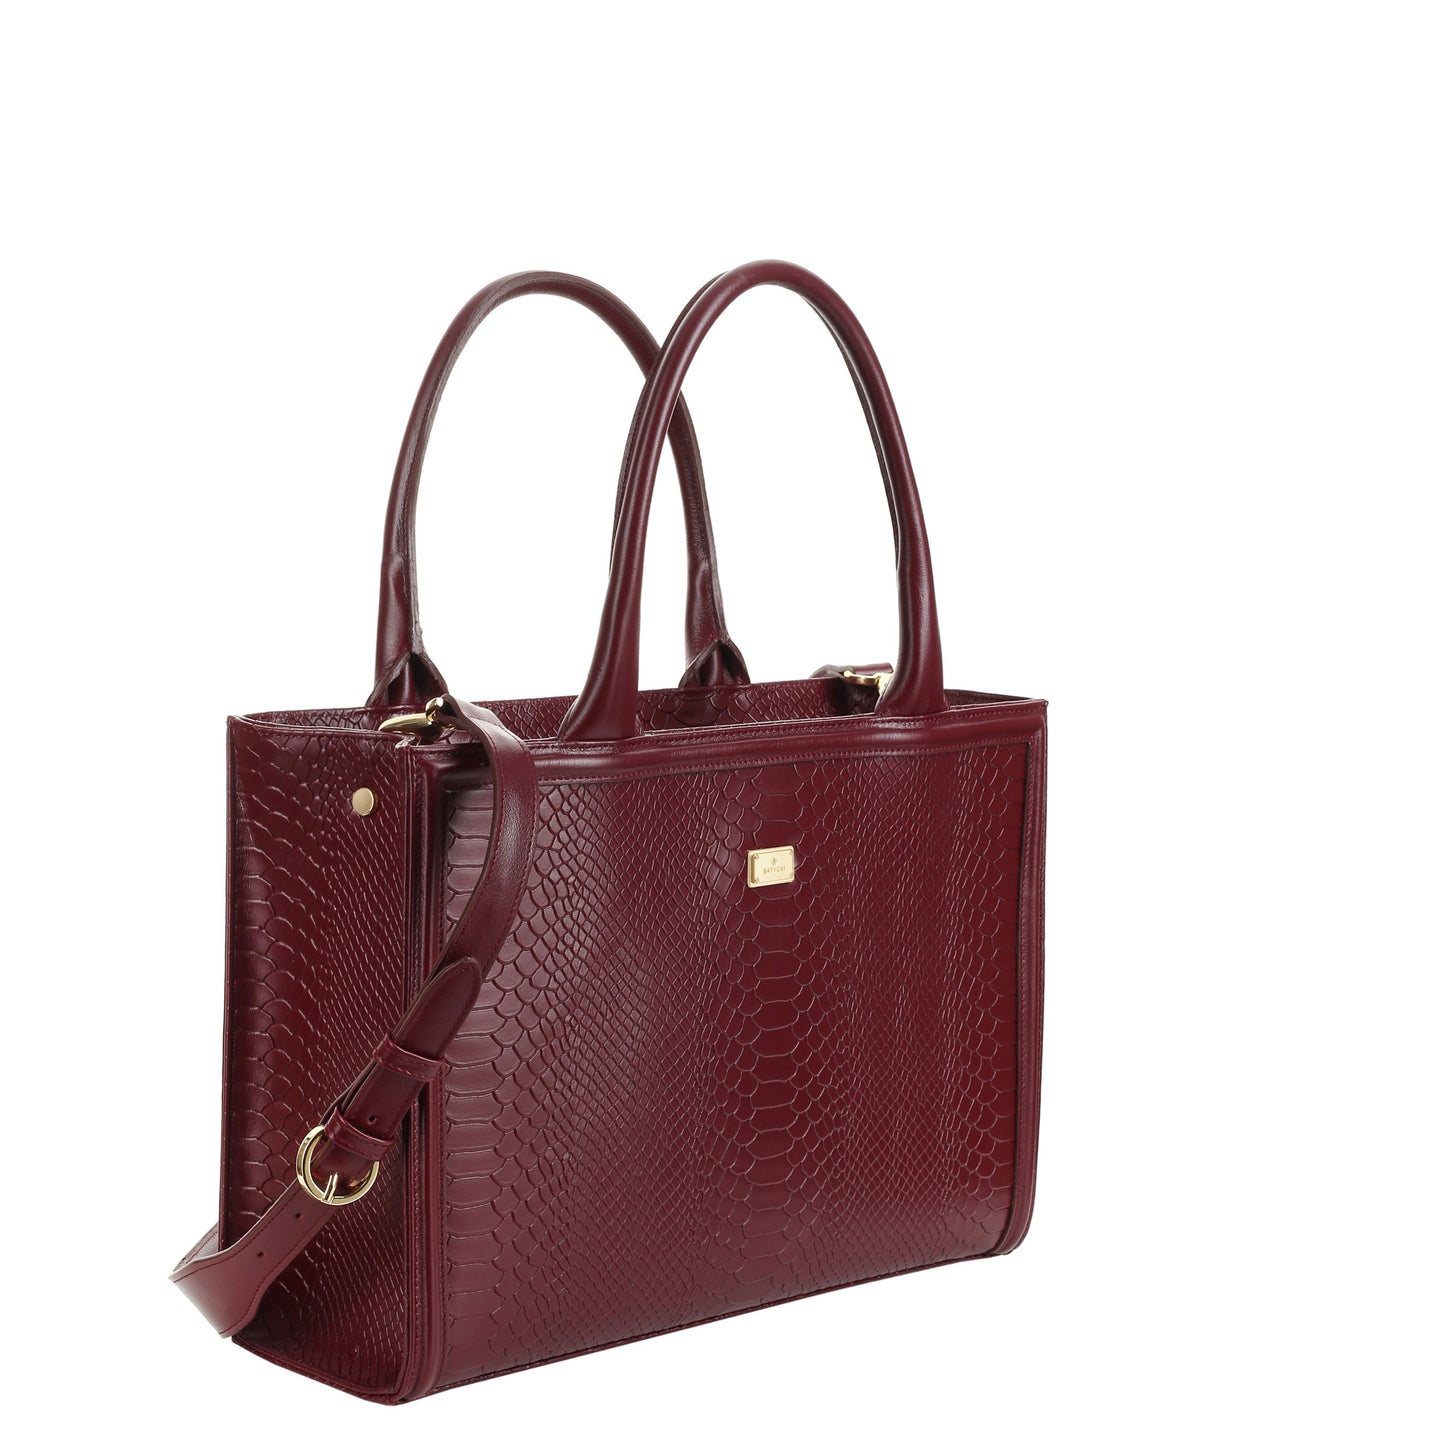 ANA CLARET women's leather handbag